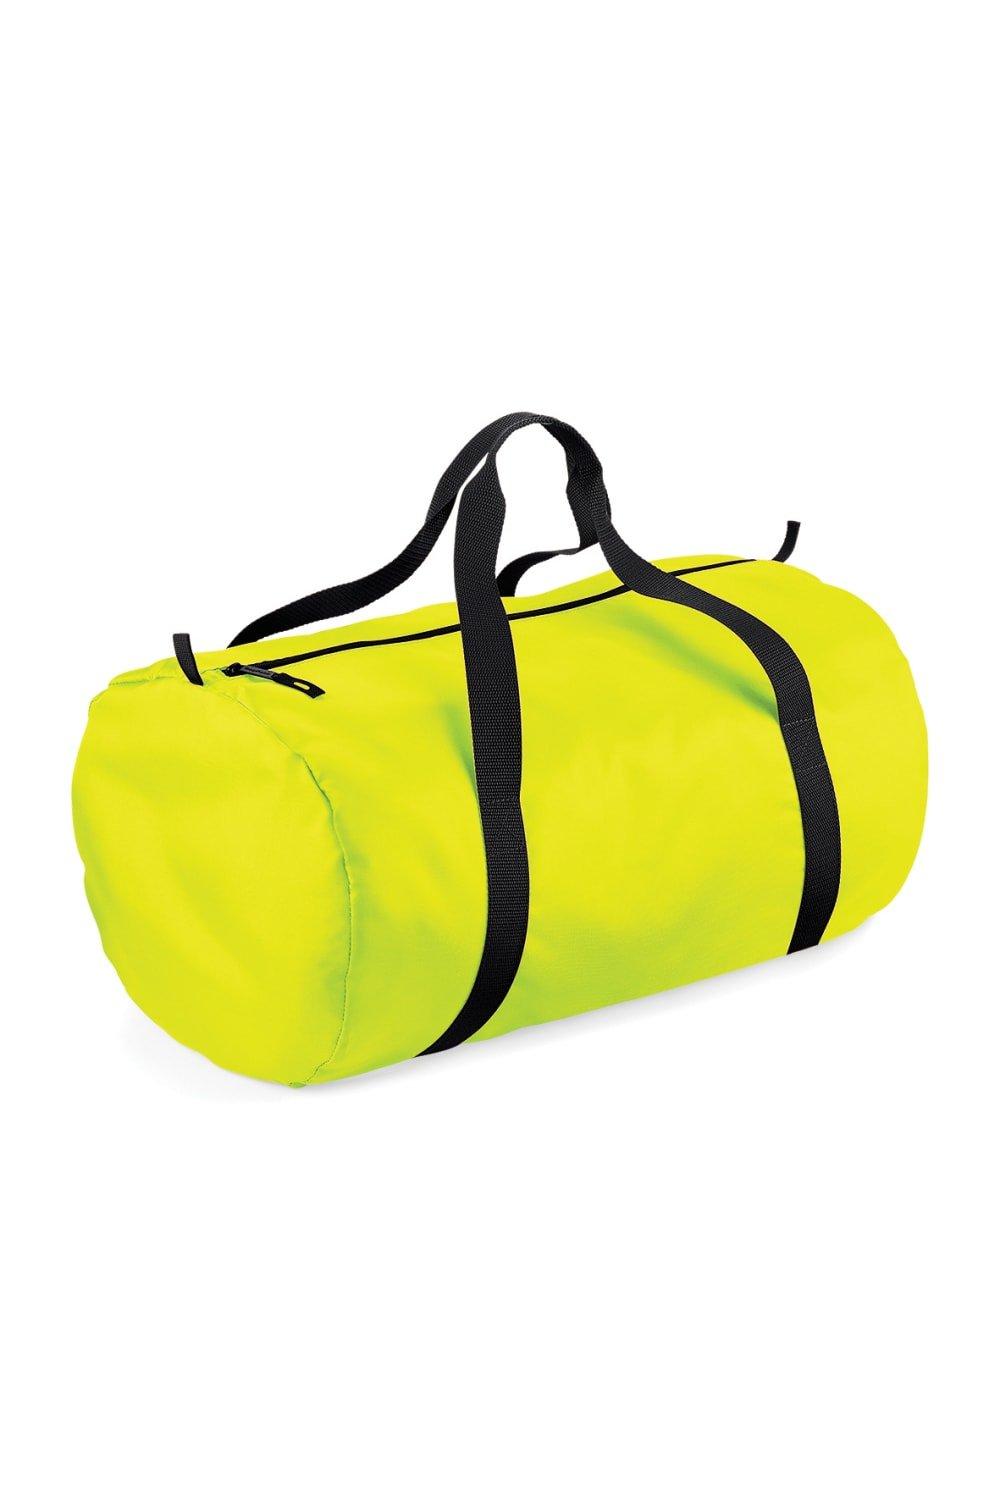 Водонепроницаемая дорожная сумка Packaway Barrel Bag / Duffle (32 литра) Bagbase, желтый